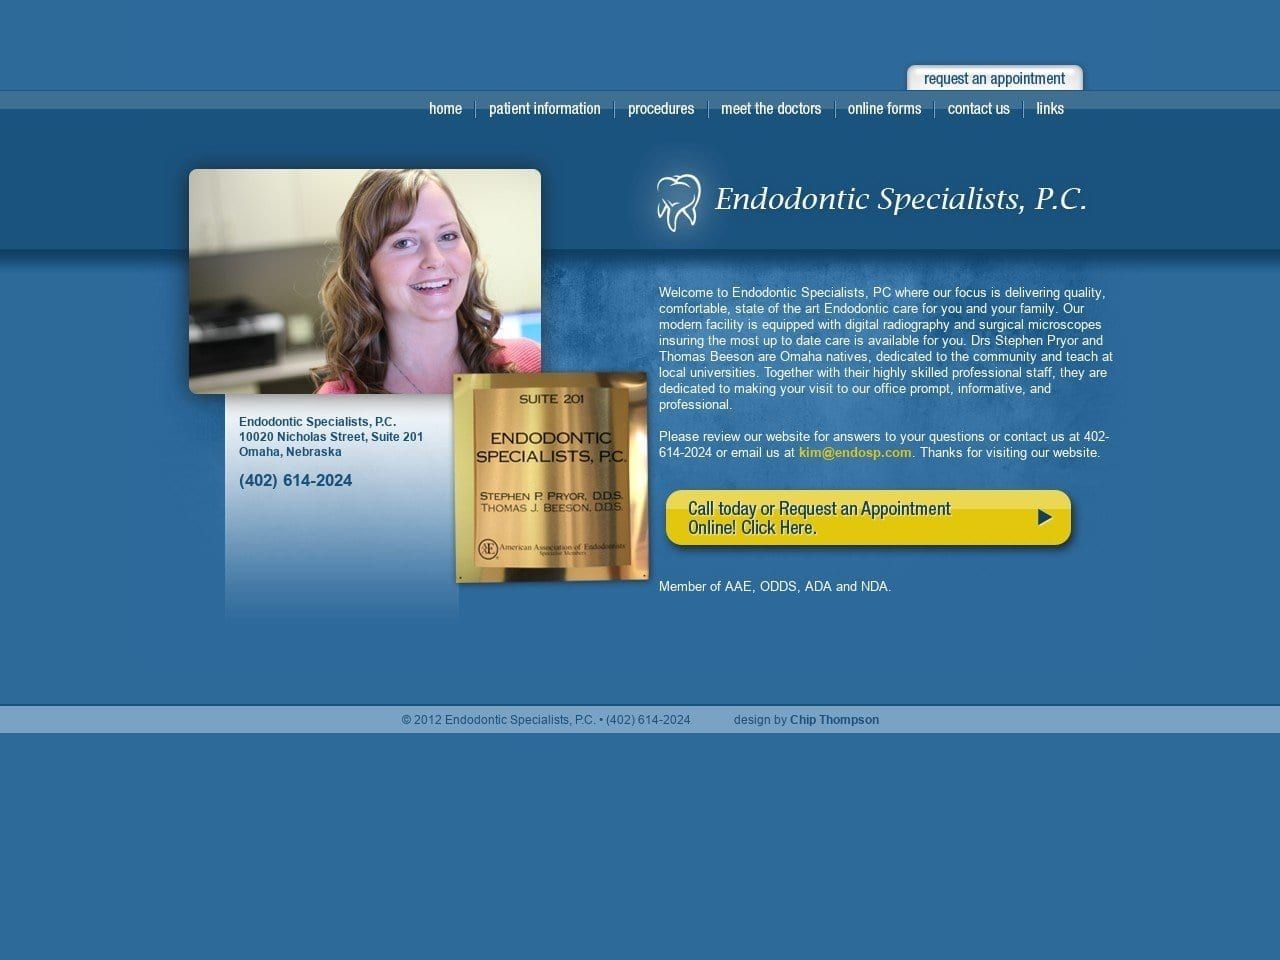 Endodontic Specialists Pryor Stephen DDS Website Screenshot from endosp.com